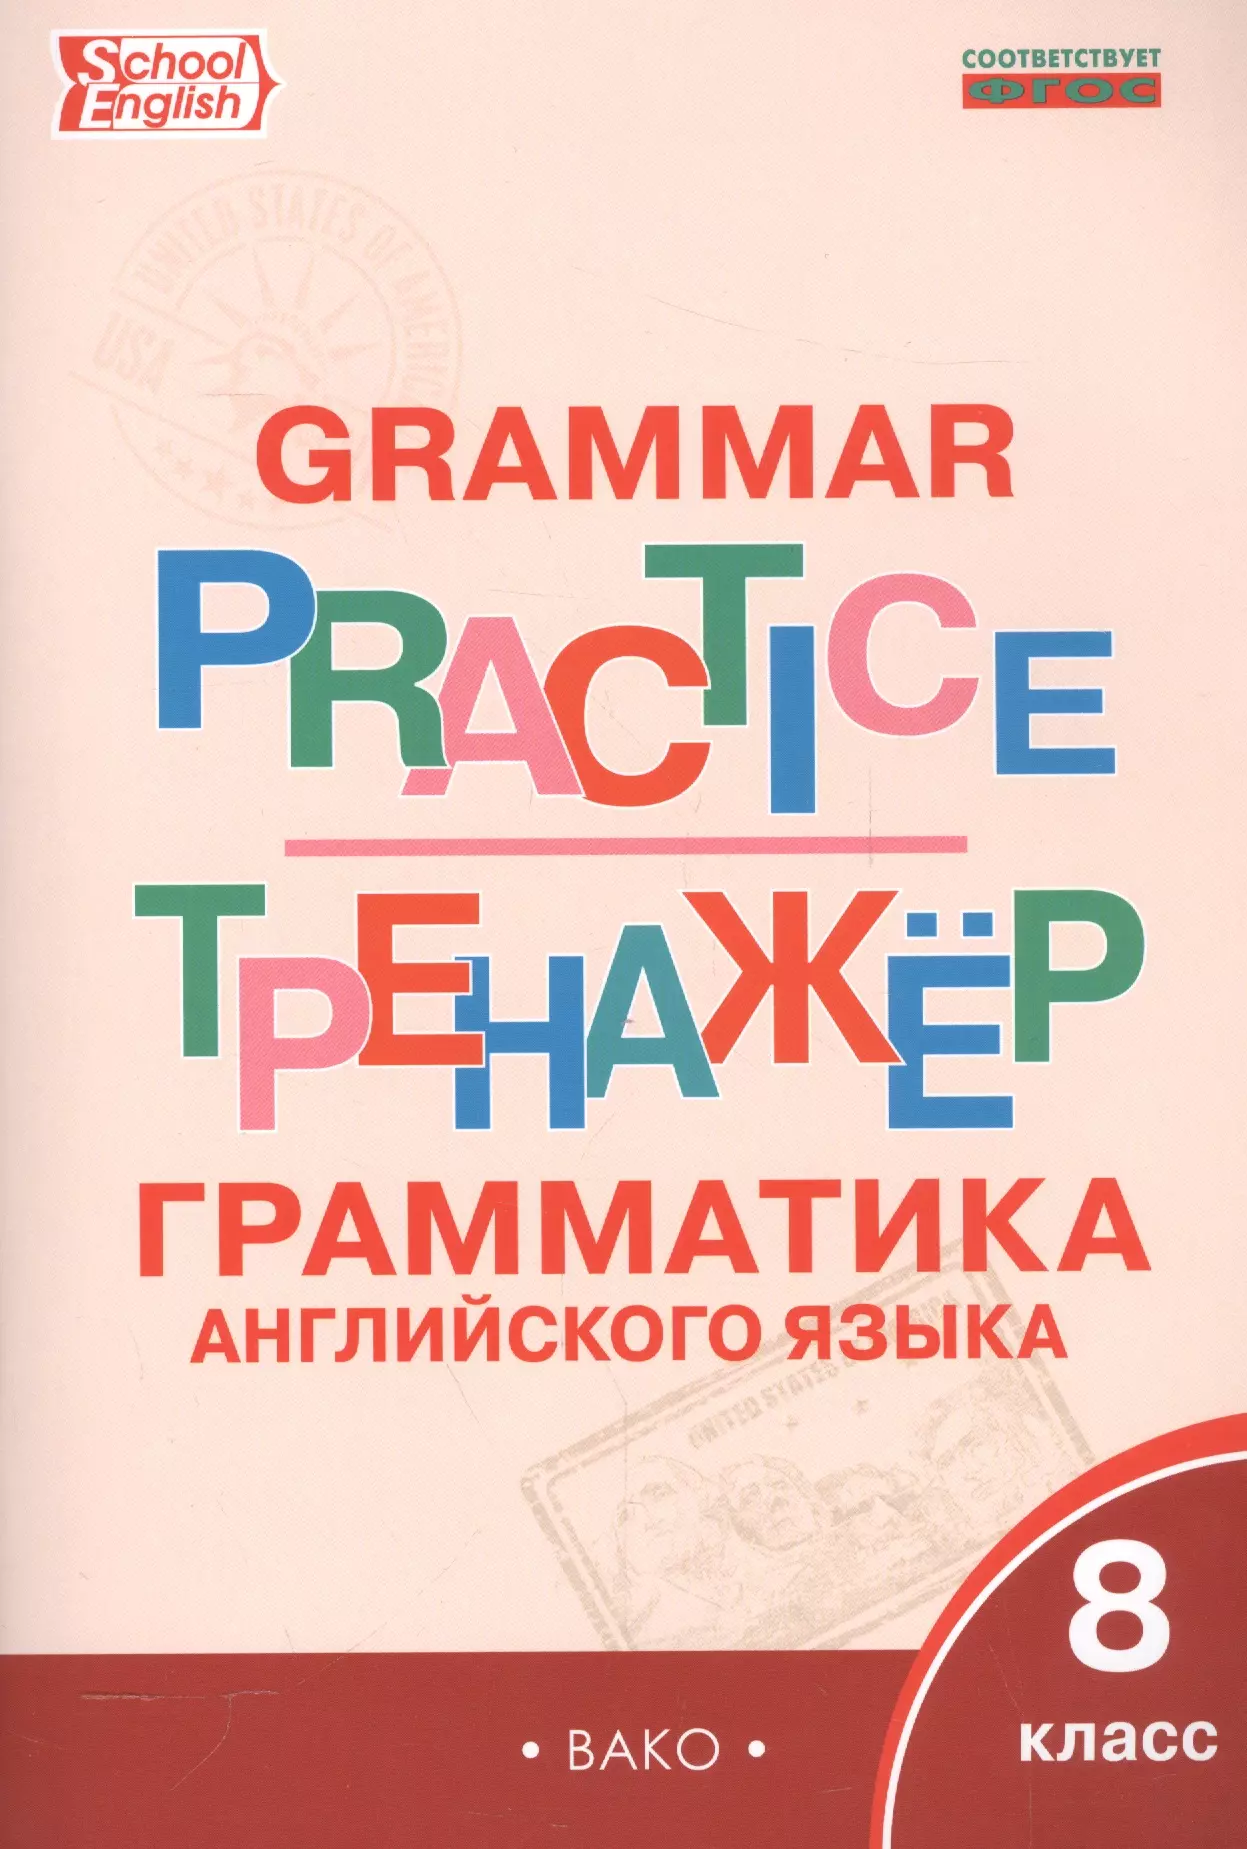 Макарова Татьяна Сергеевна - Английский язык: грамматический тренажёр 8 кл.